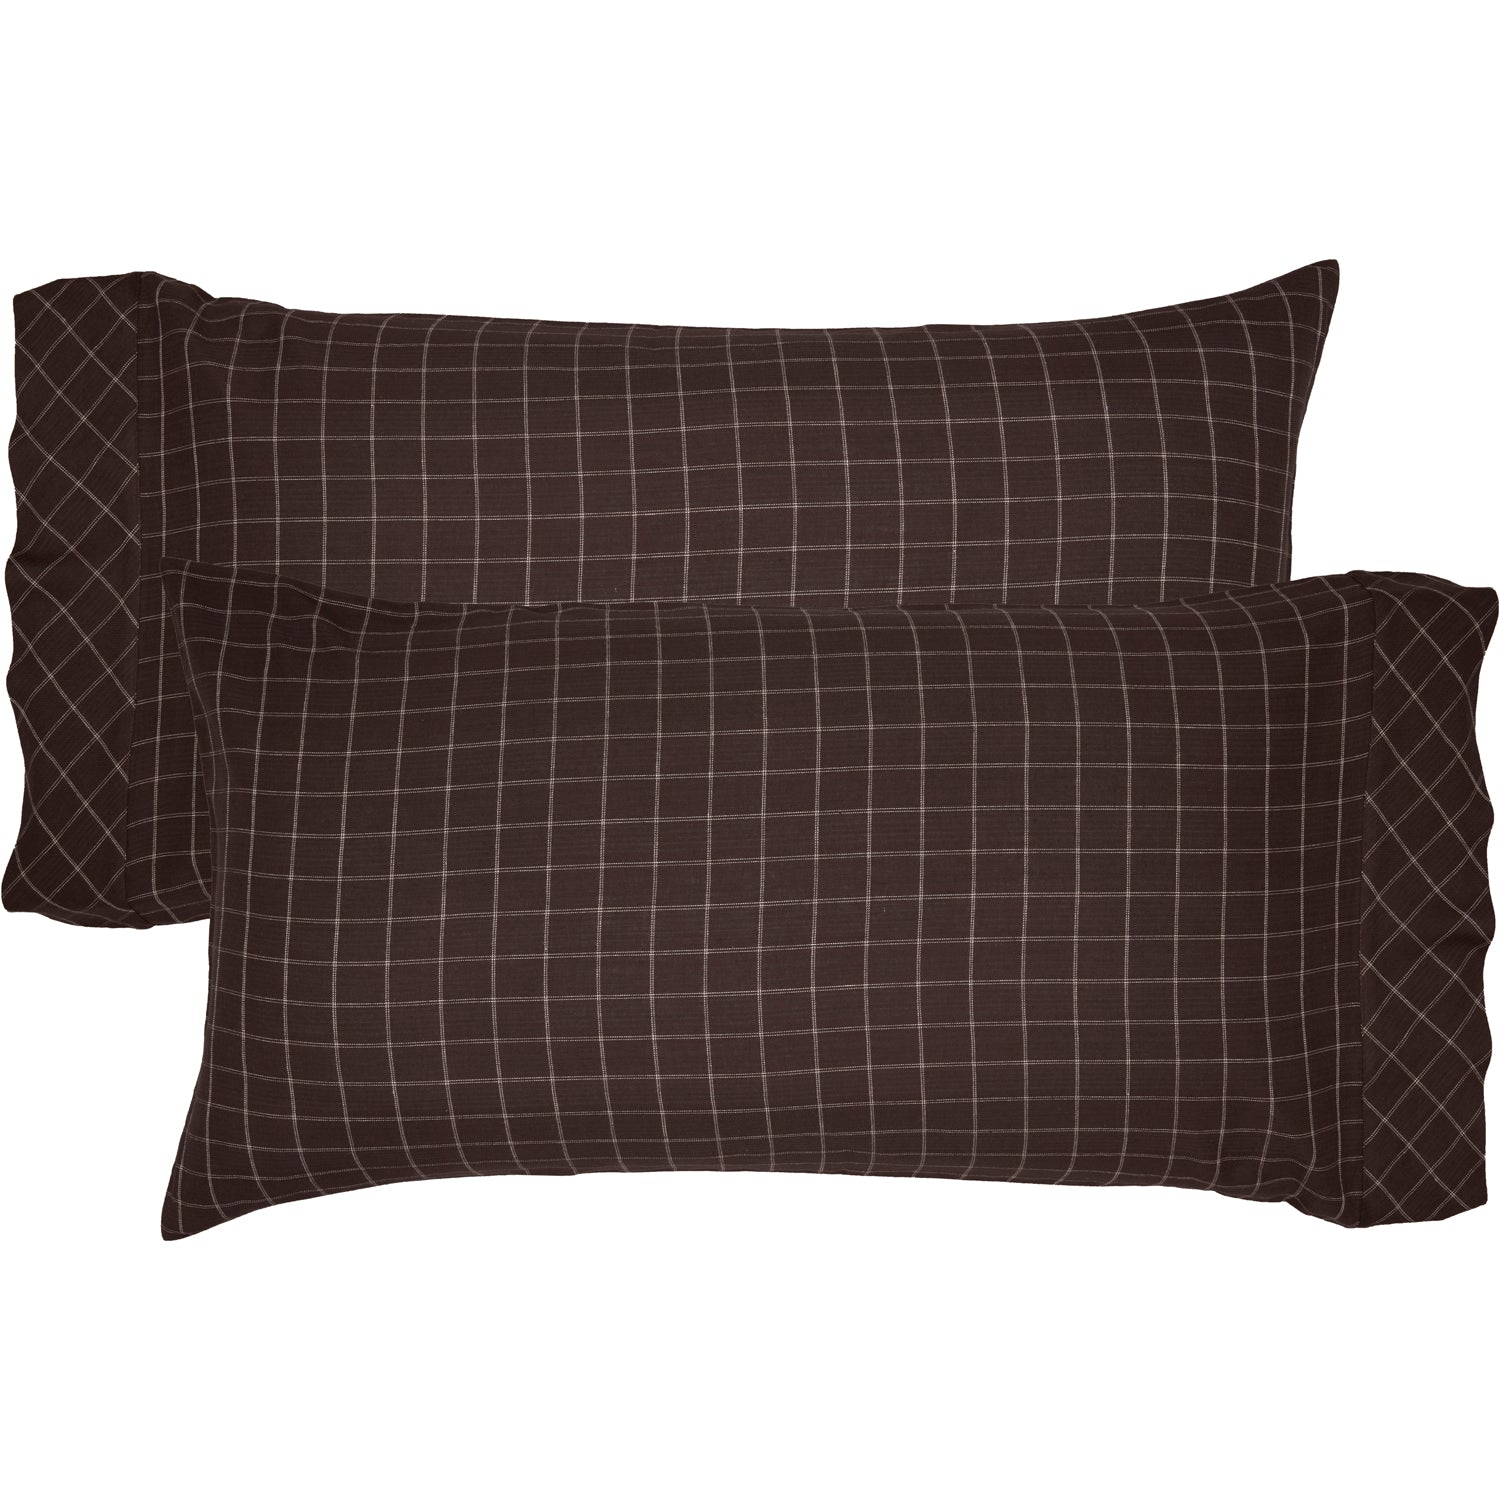 Oak & Asher Wyatt King Pillow Case Set of 2 21x40 By VHC Brands